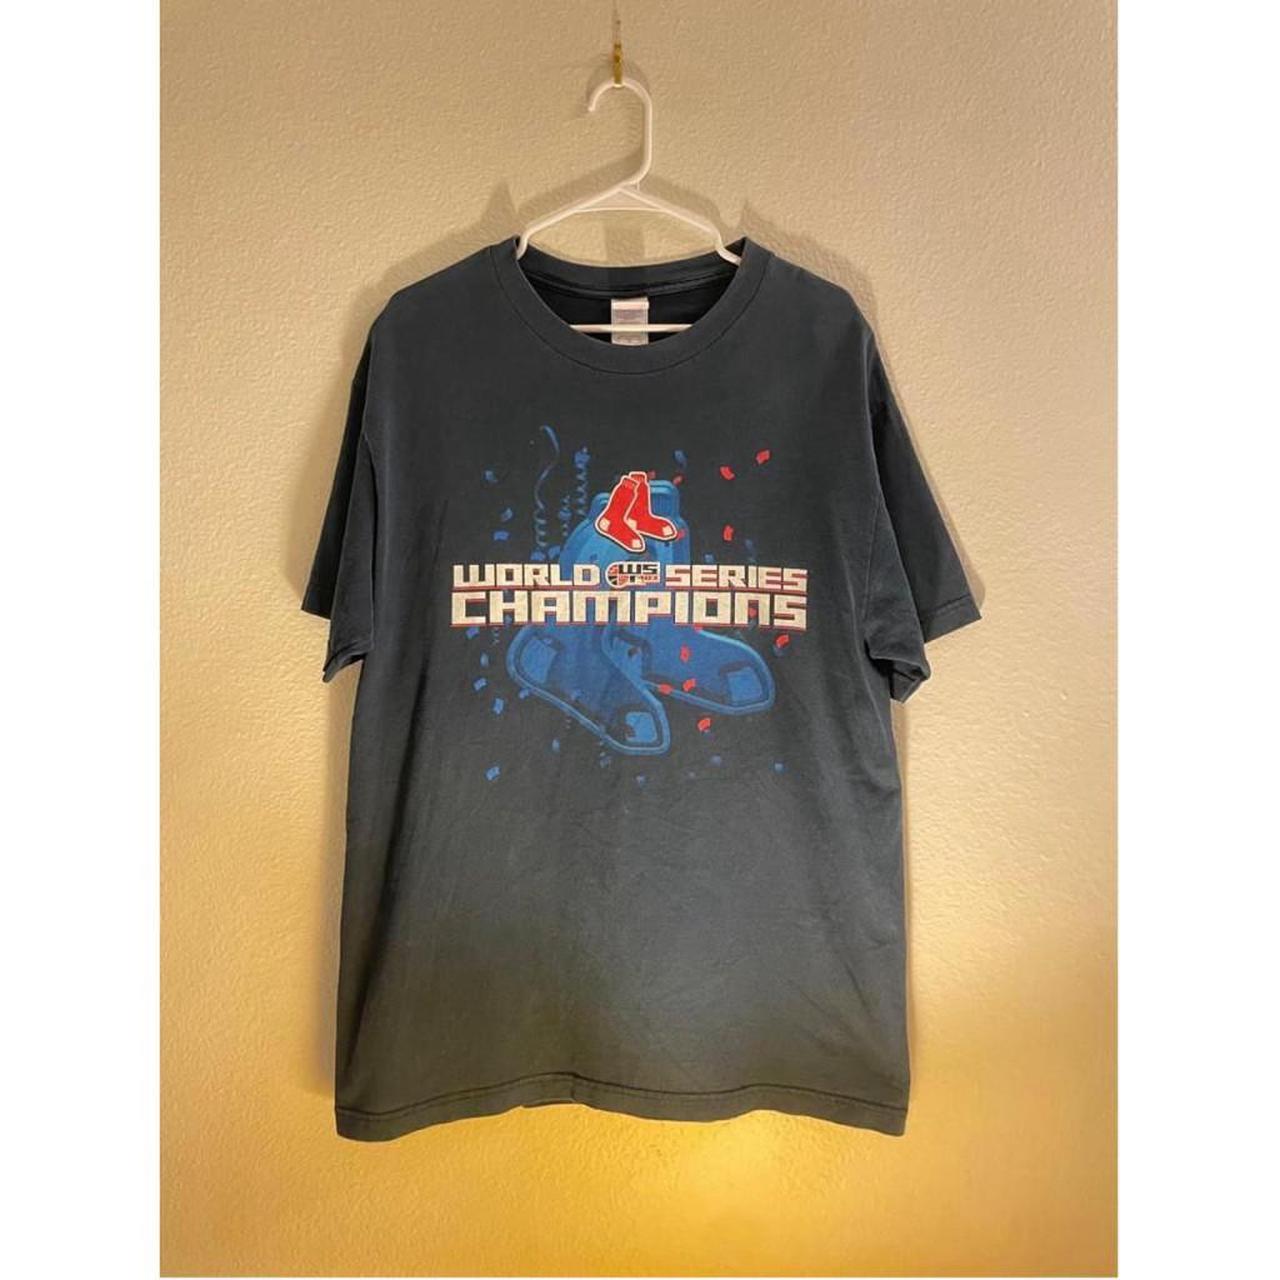 Boston Red Sox MLB Baseball 2007 World Series Champions T Shirt